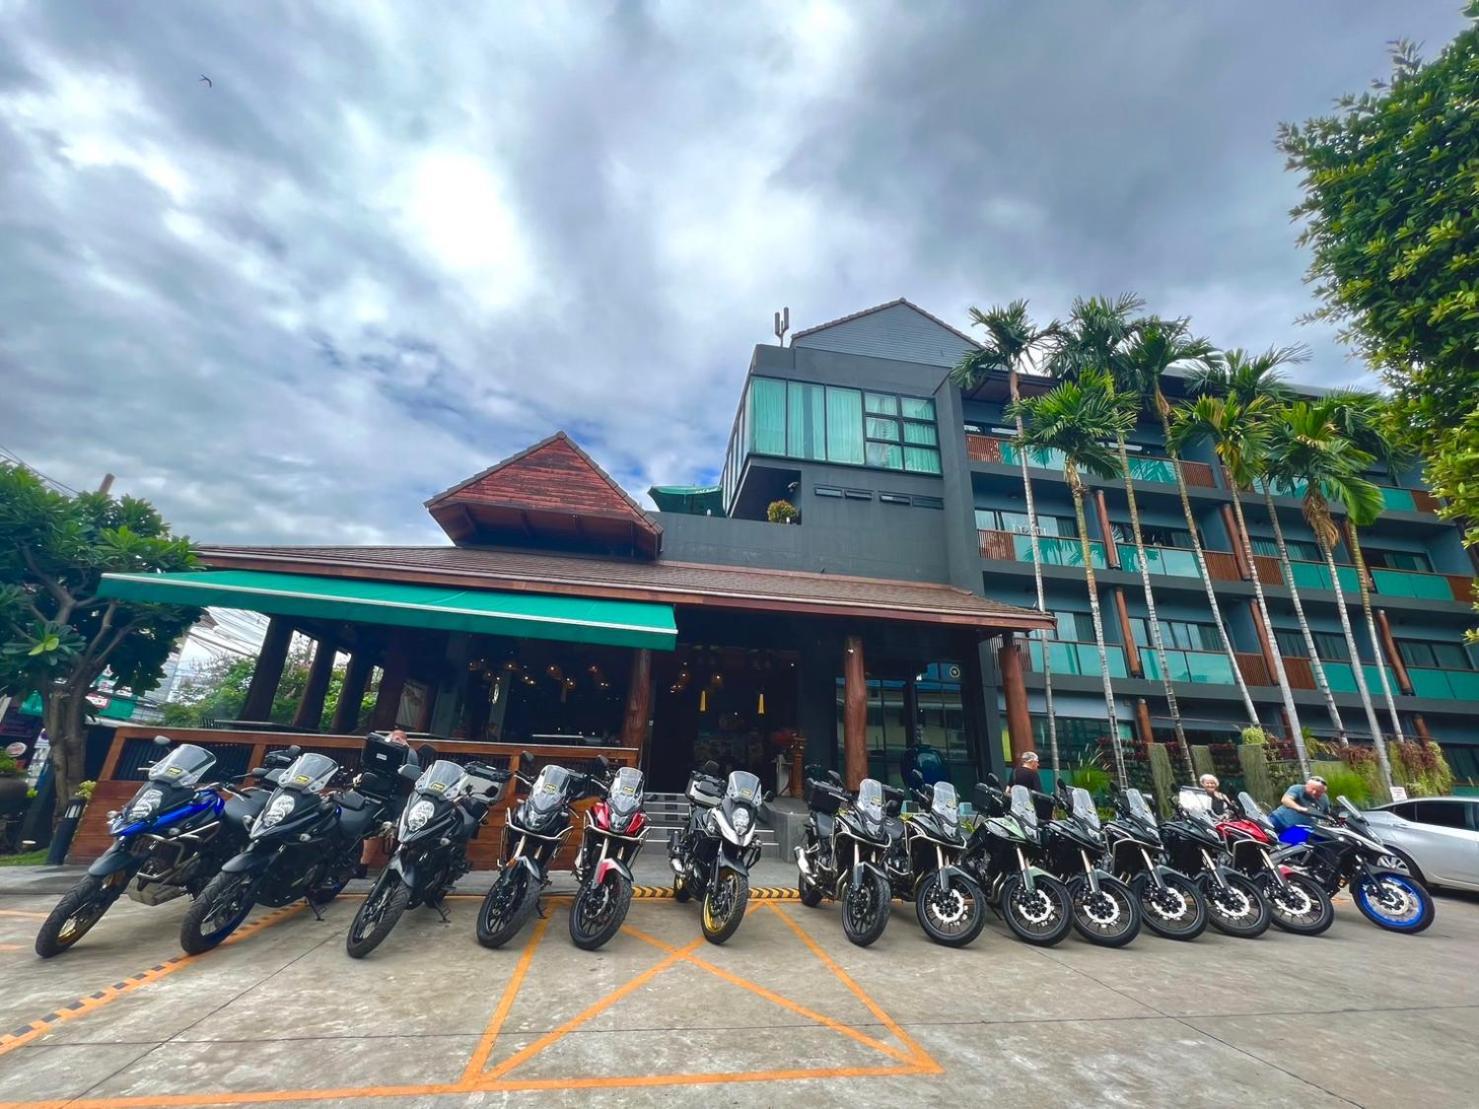 Le Naview @Prasingh Hotel Chiang Mai Exterior foto